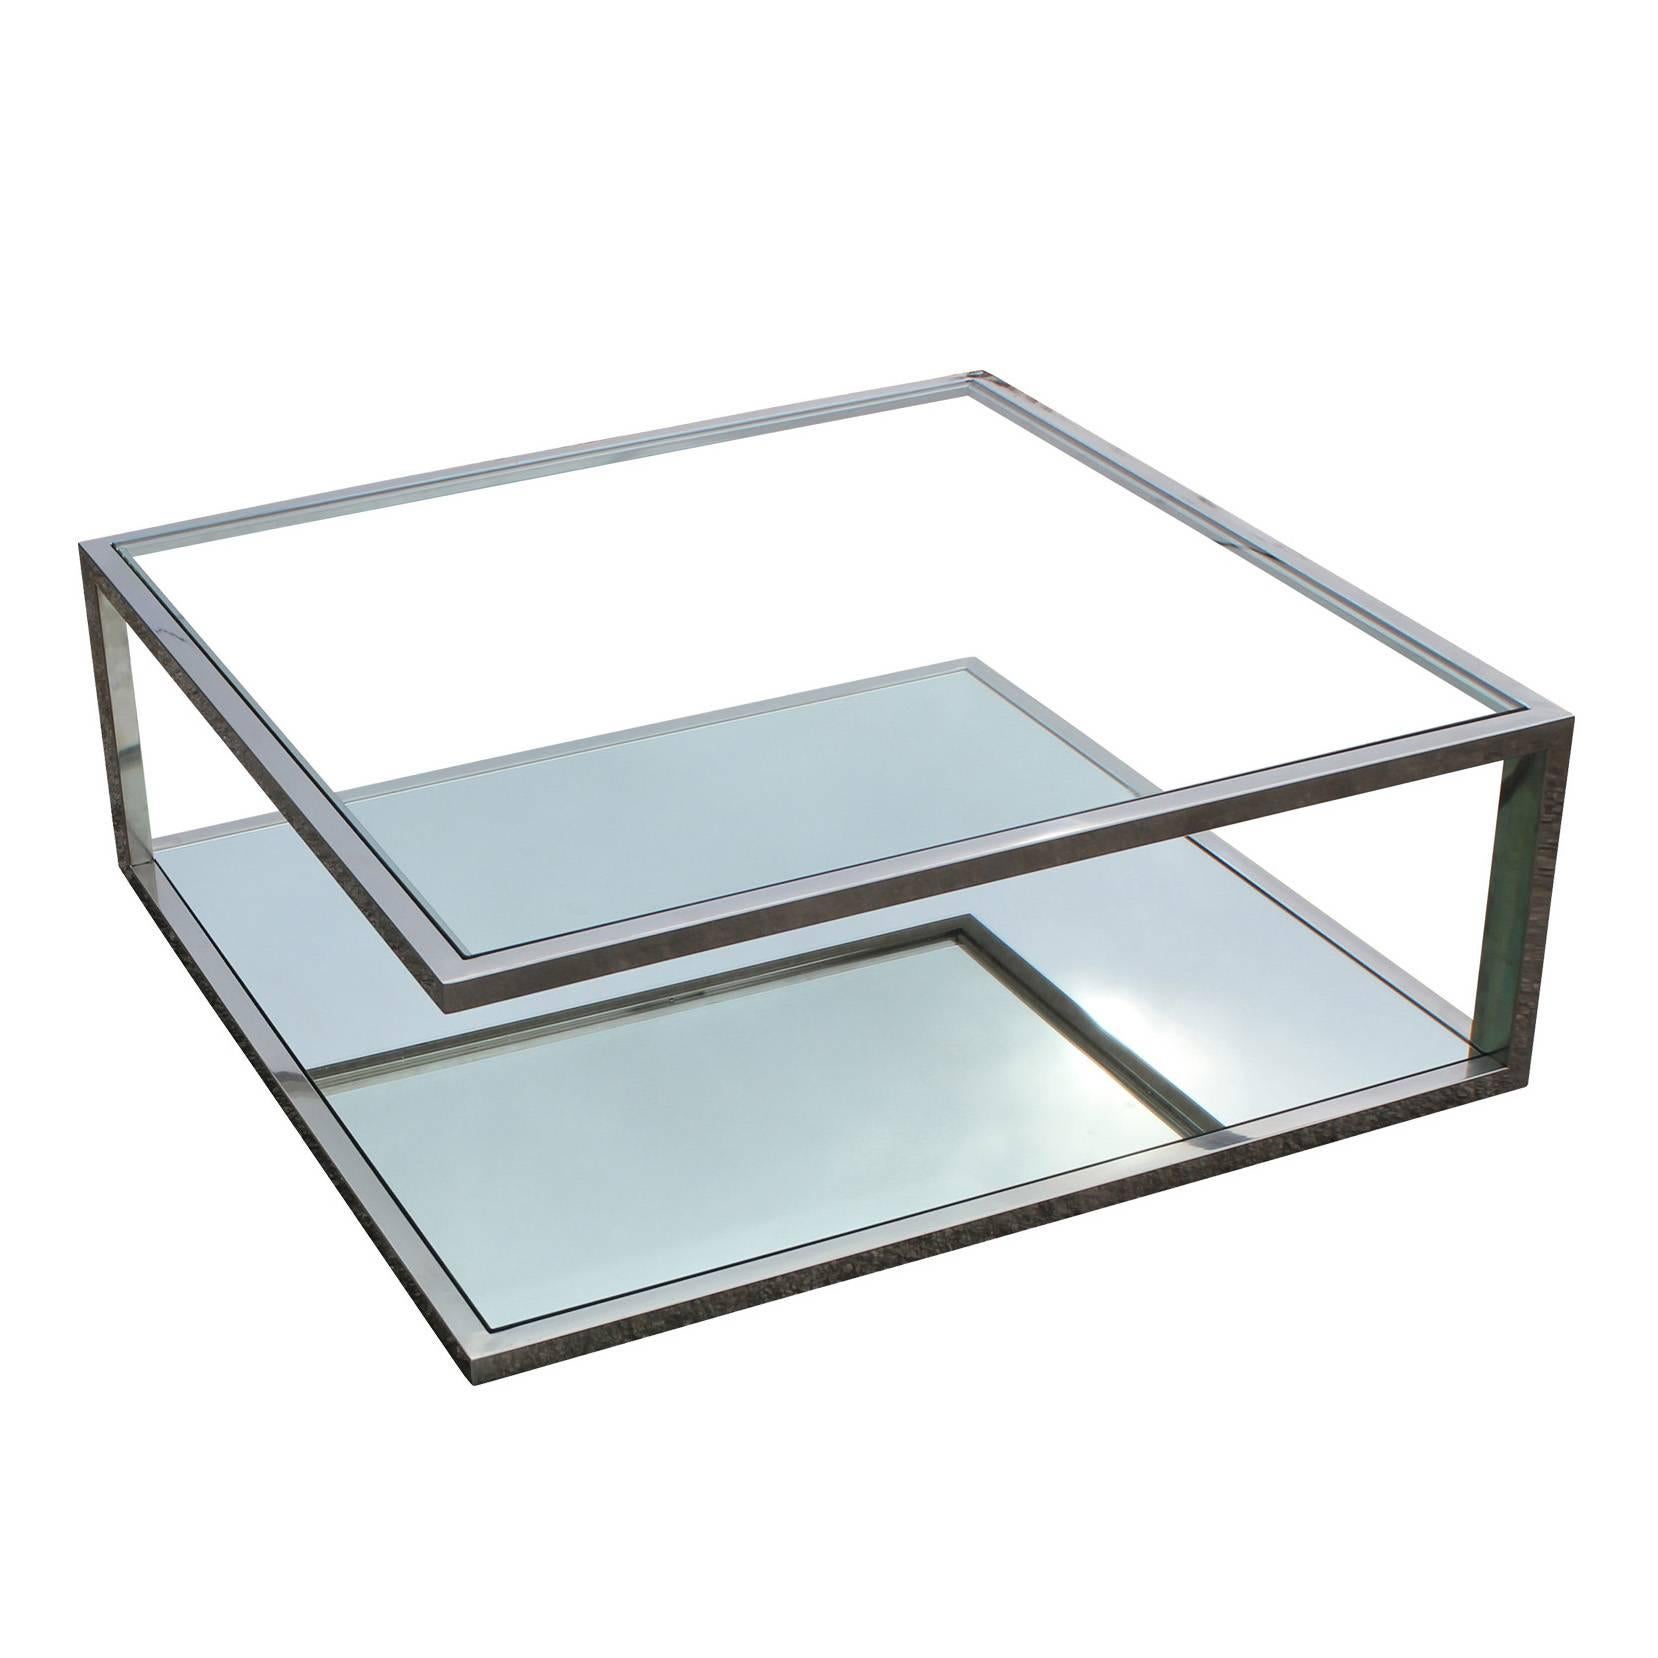 Angular Modernist Square Chrome and Glass Coffee Table